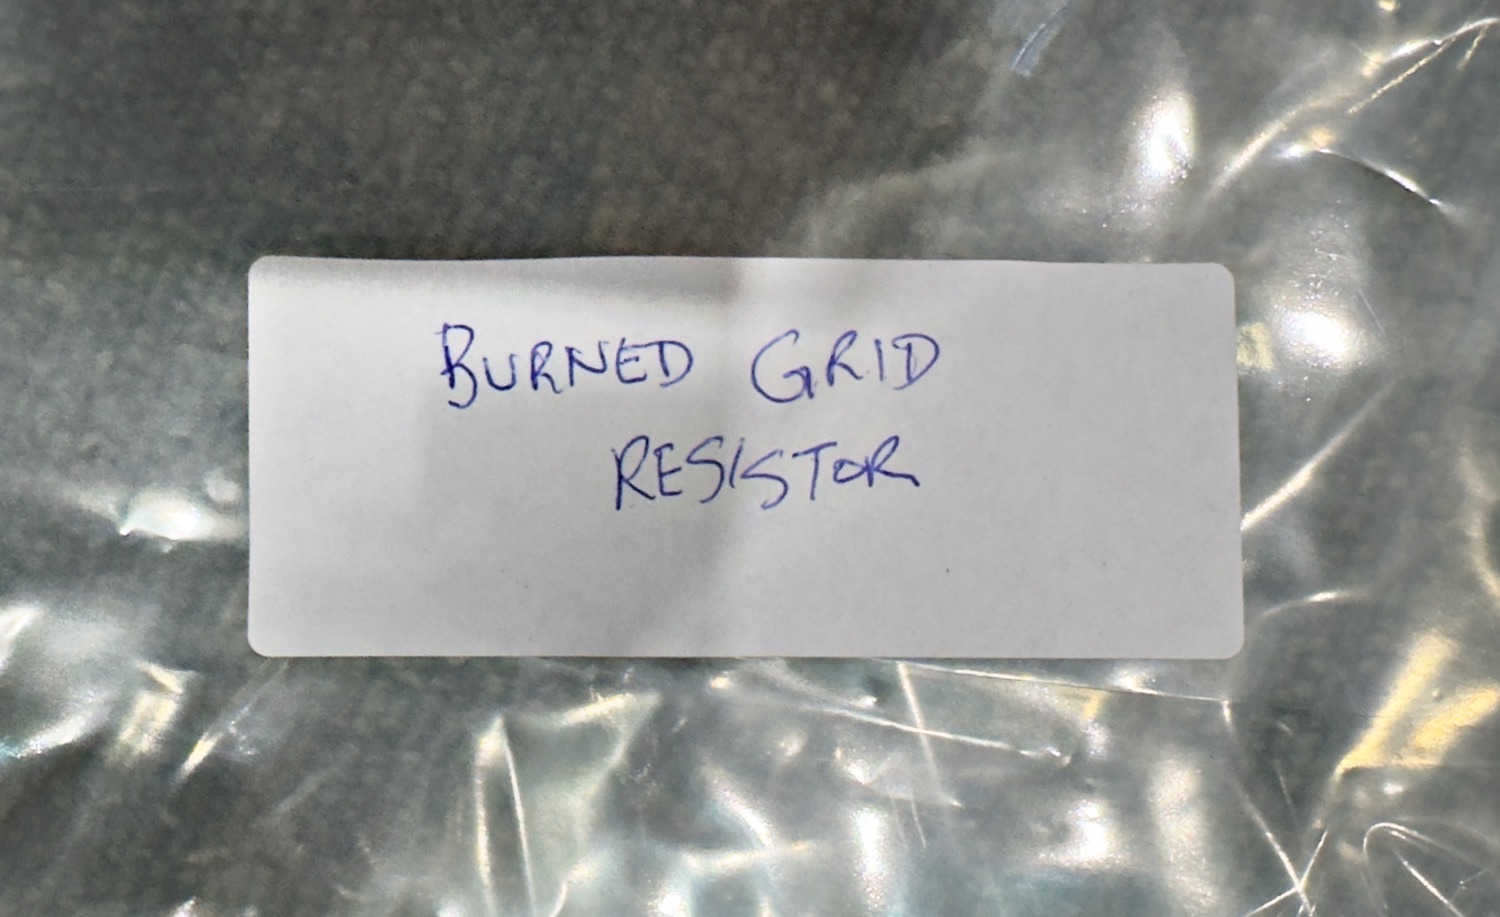 It has a minor problem - Burned Grid Resistor.